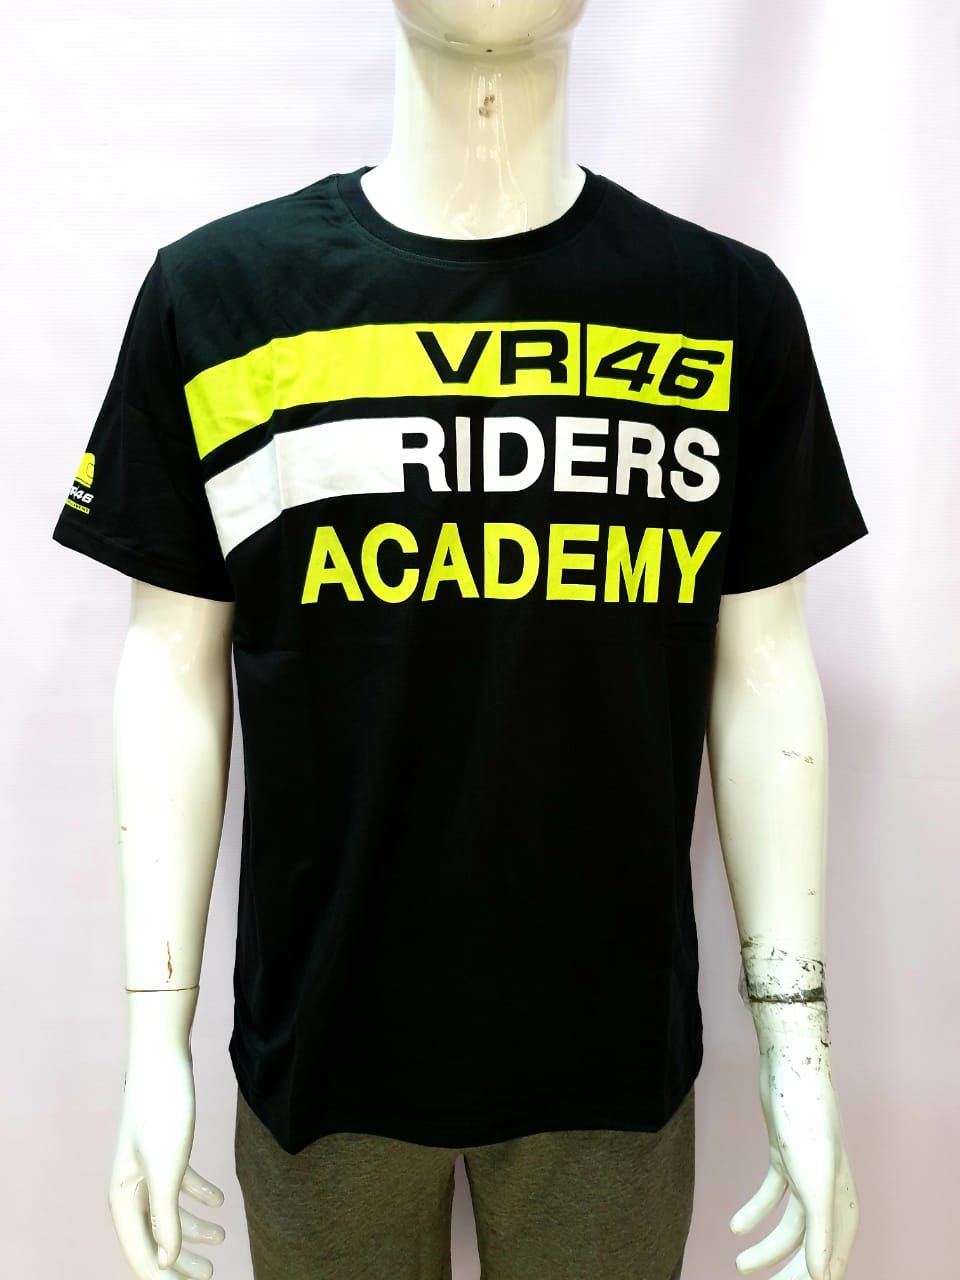 VR 46 Riders Academy Round Neck T-Shirt